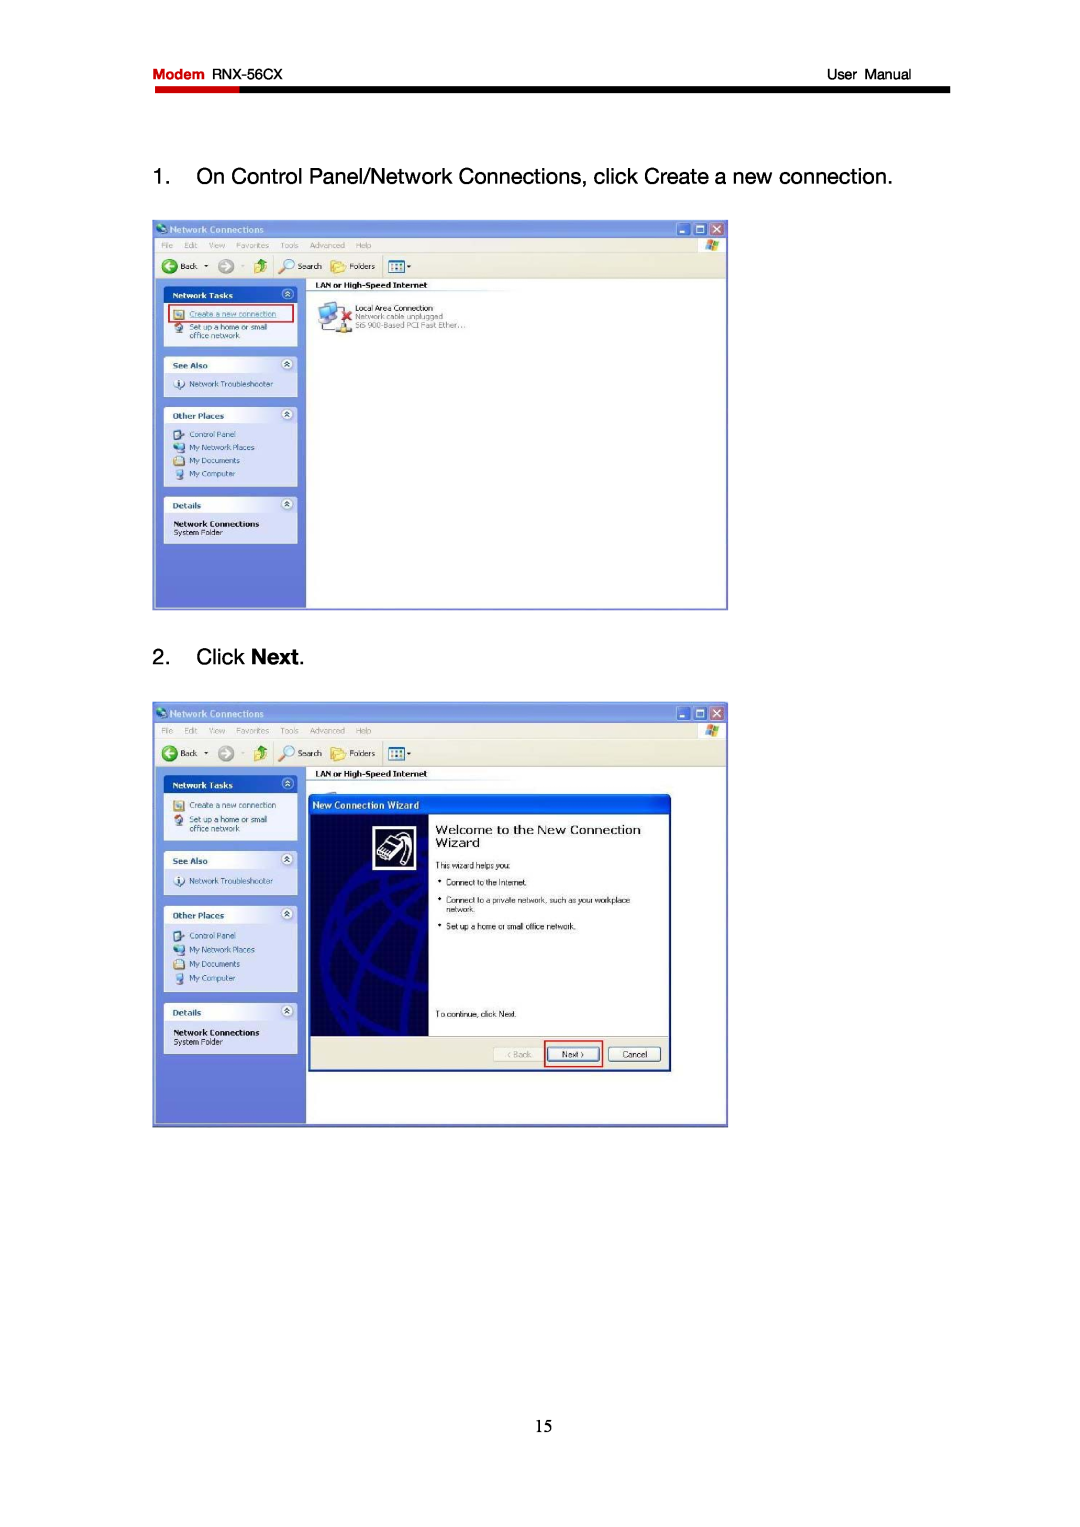 Rosewill user manual Click Next, Modem RNX-56CX, User Manual 